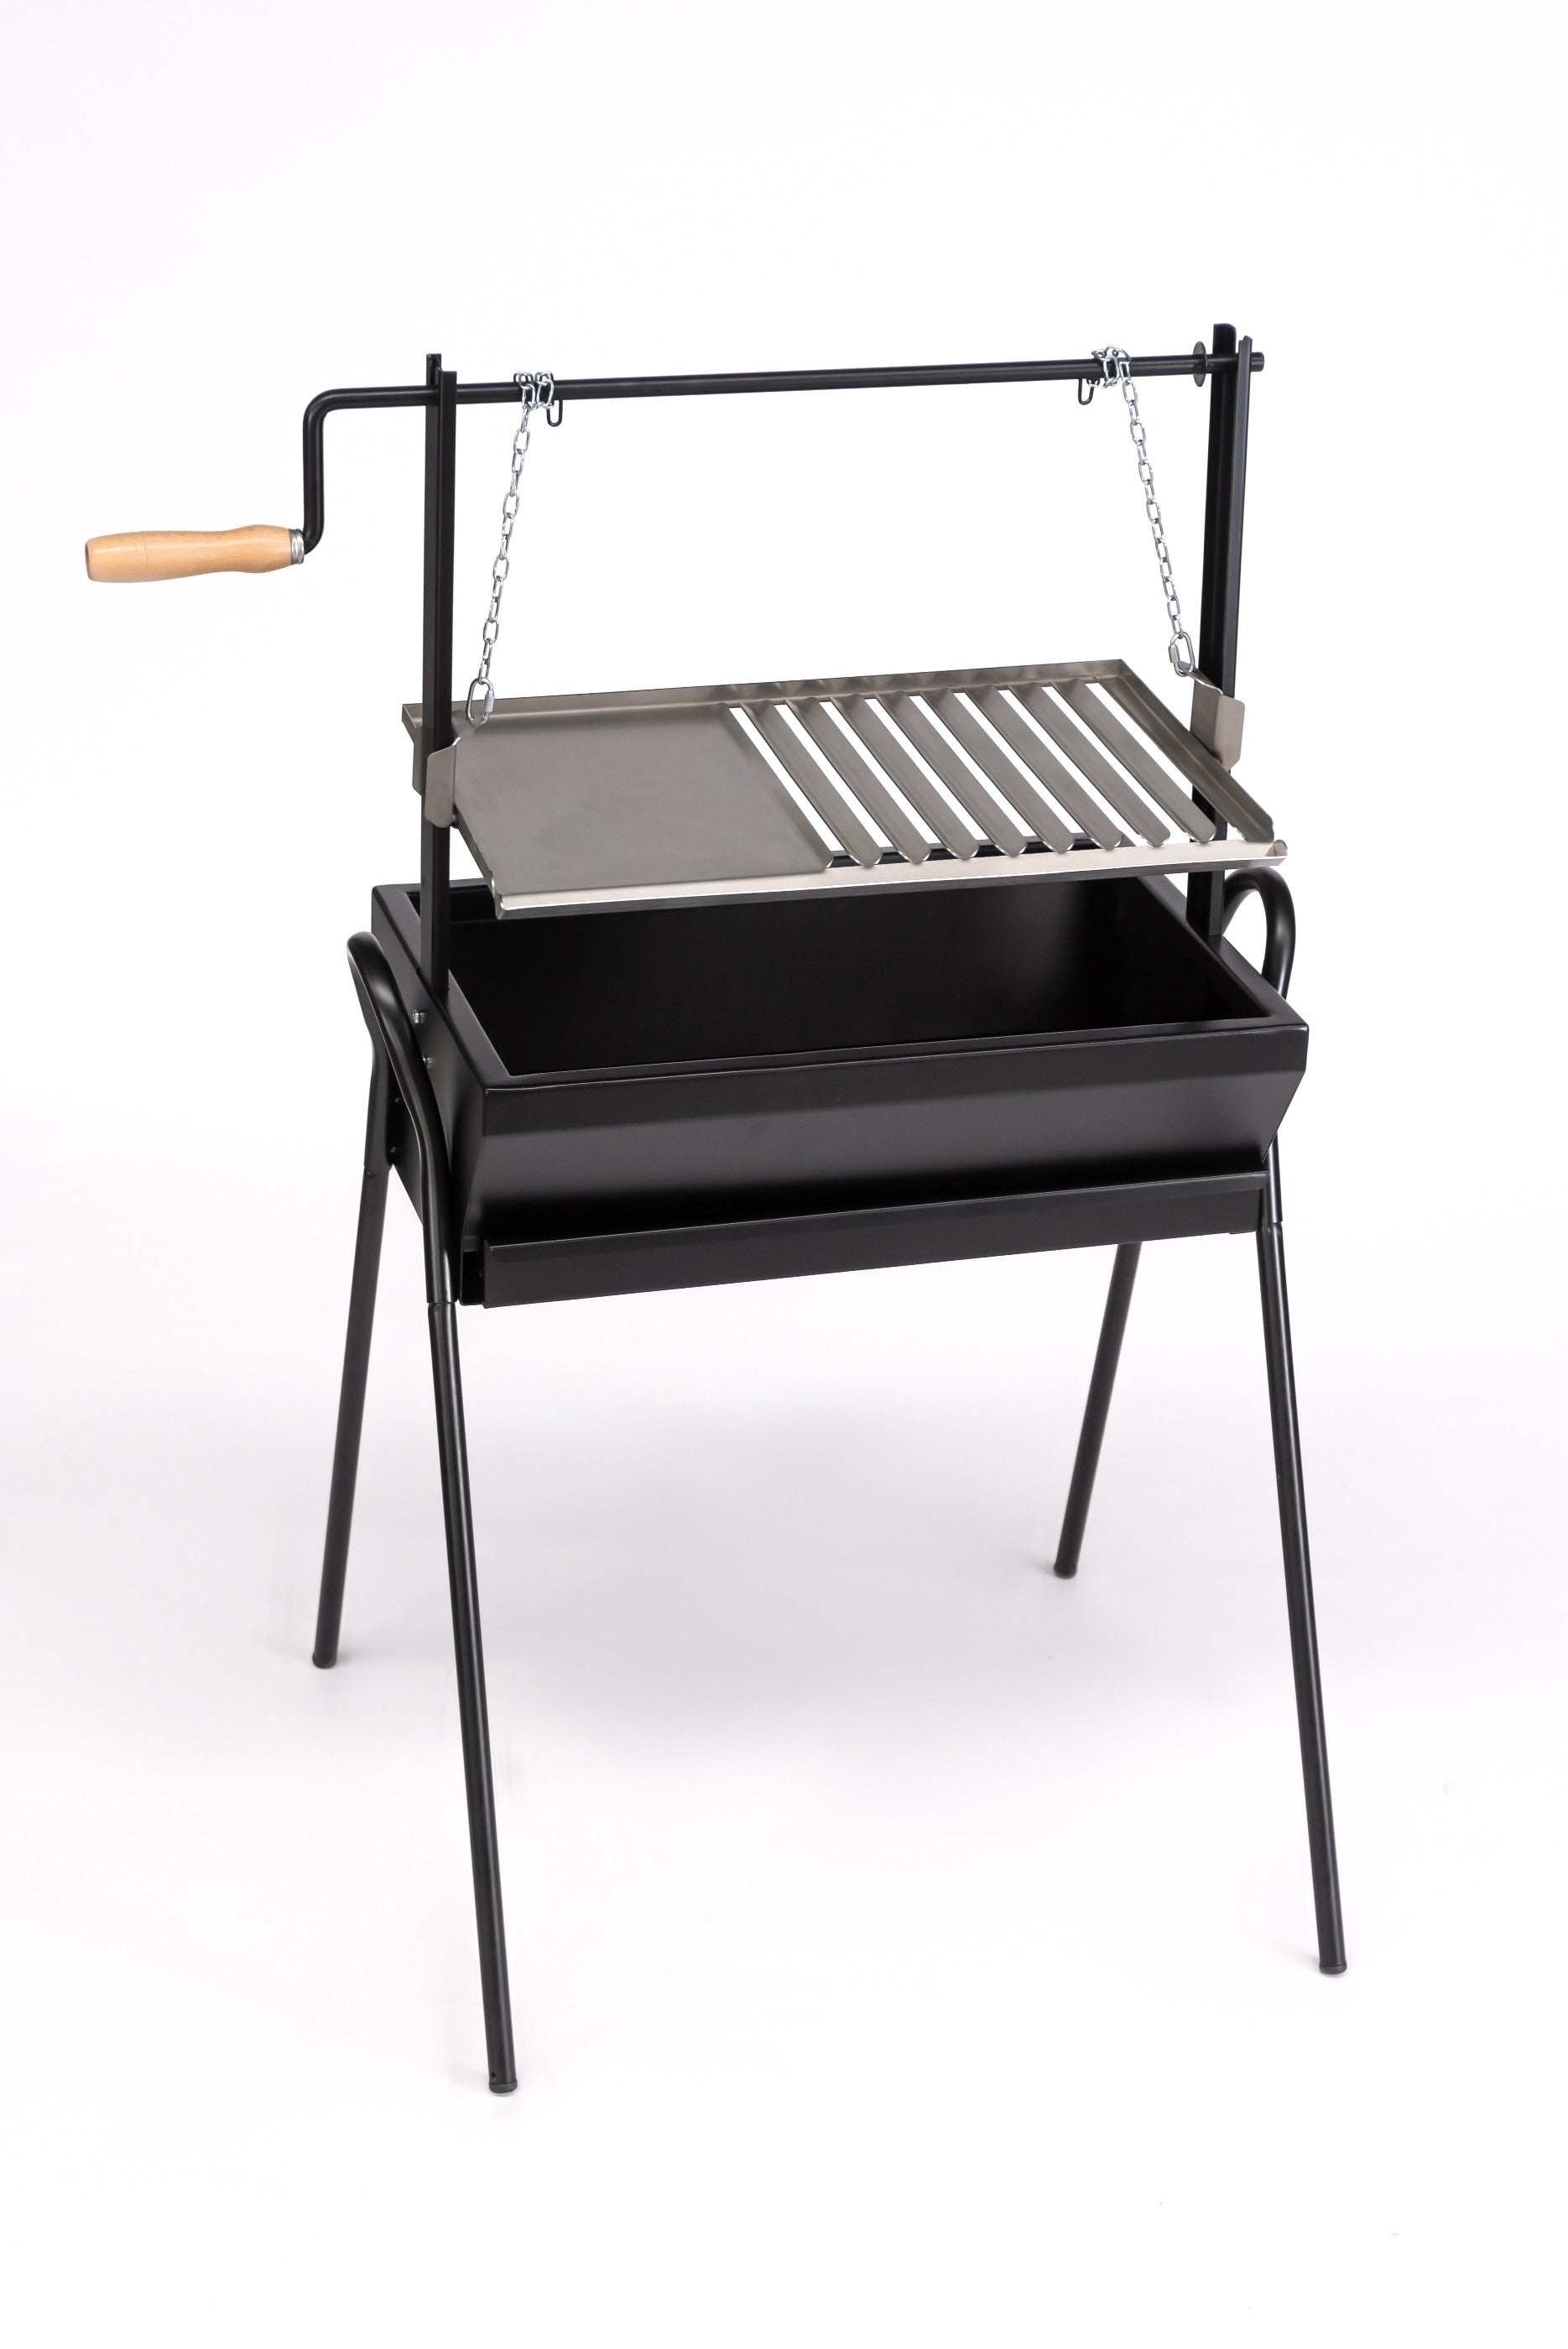 Argentine barbecue / grill